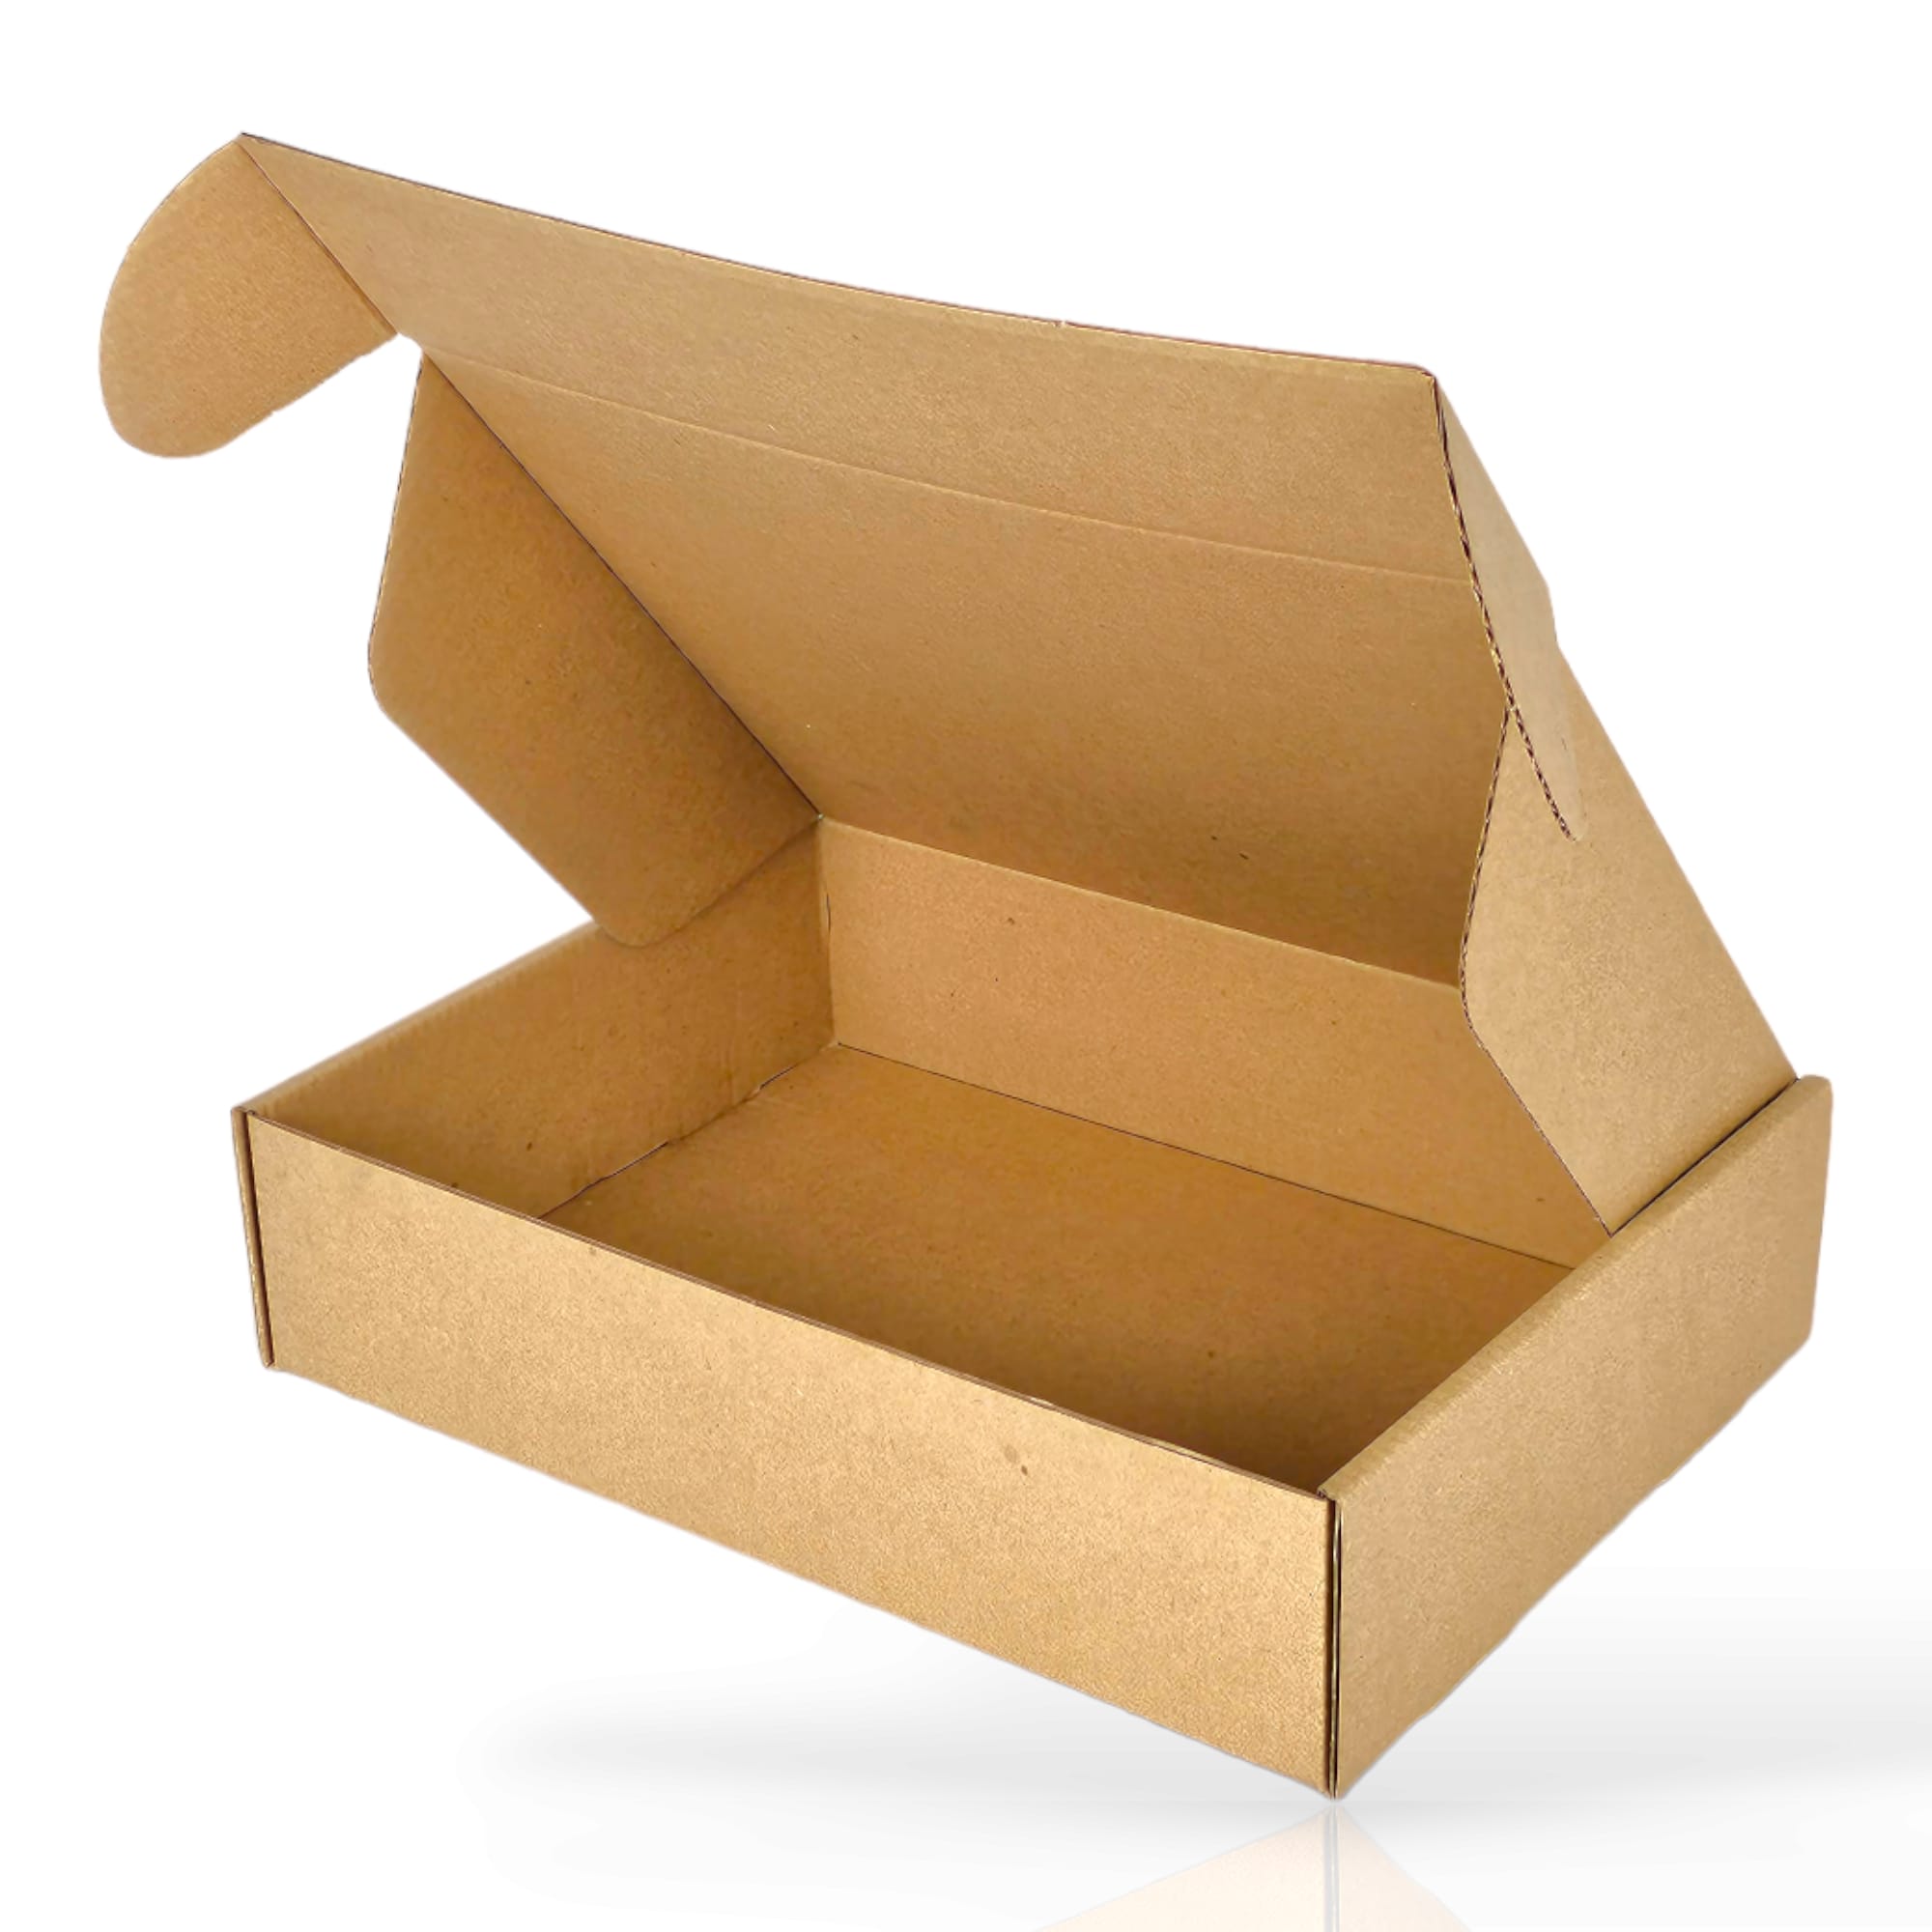 Caja Carton Mudanza Embalaje 60x40x40 Cm Pack X 10 Unidades